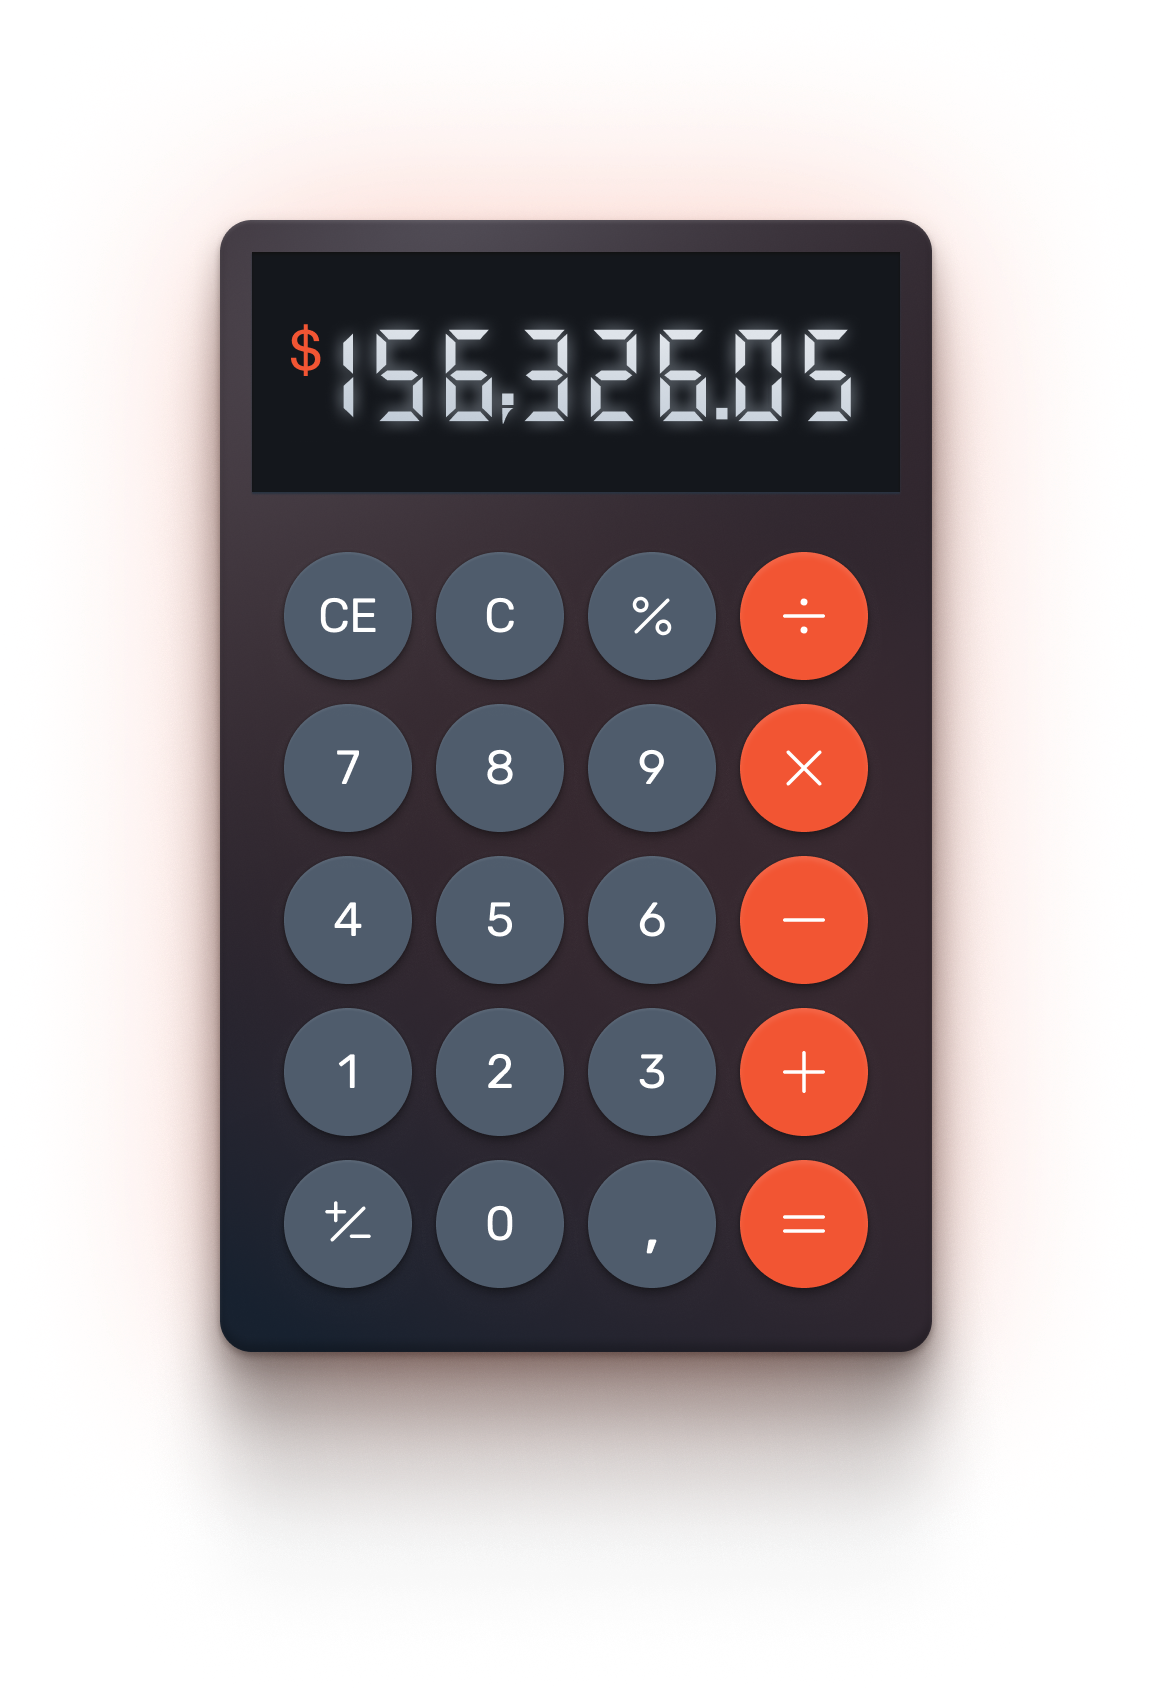 image of a calculator